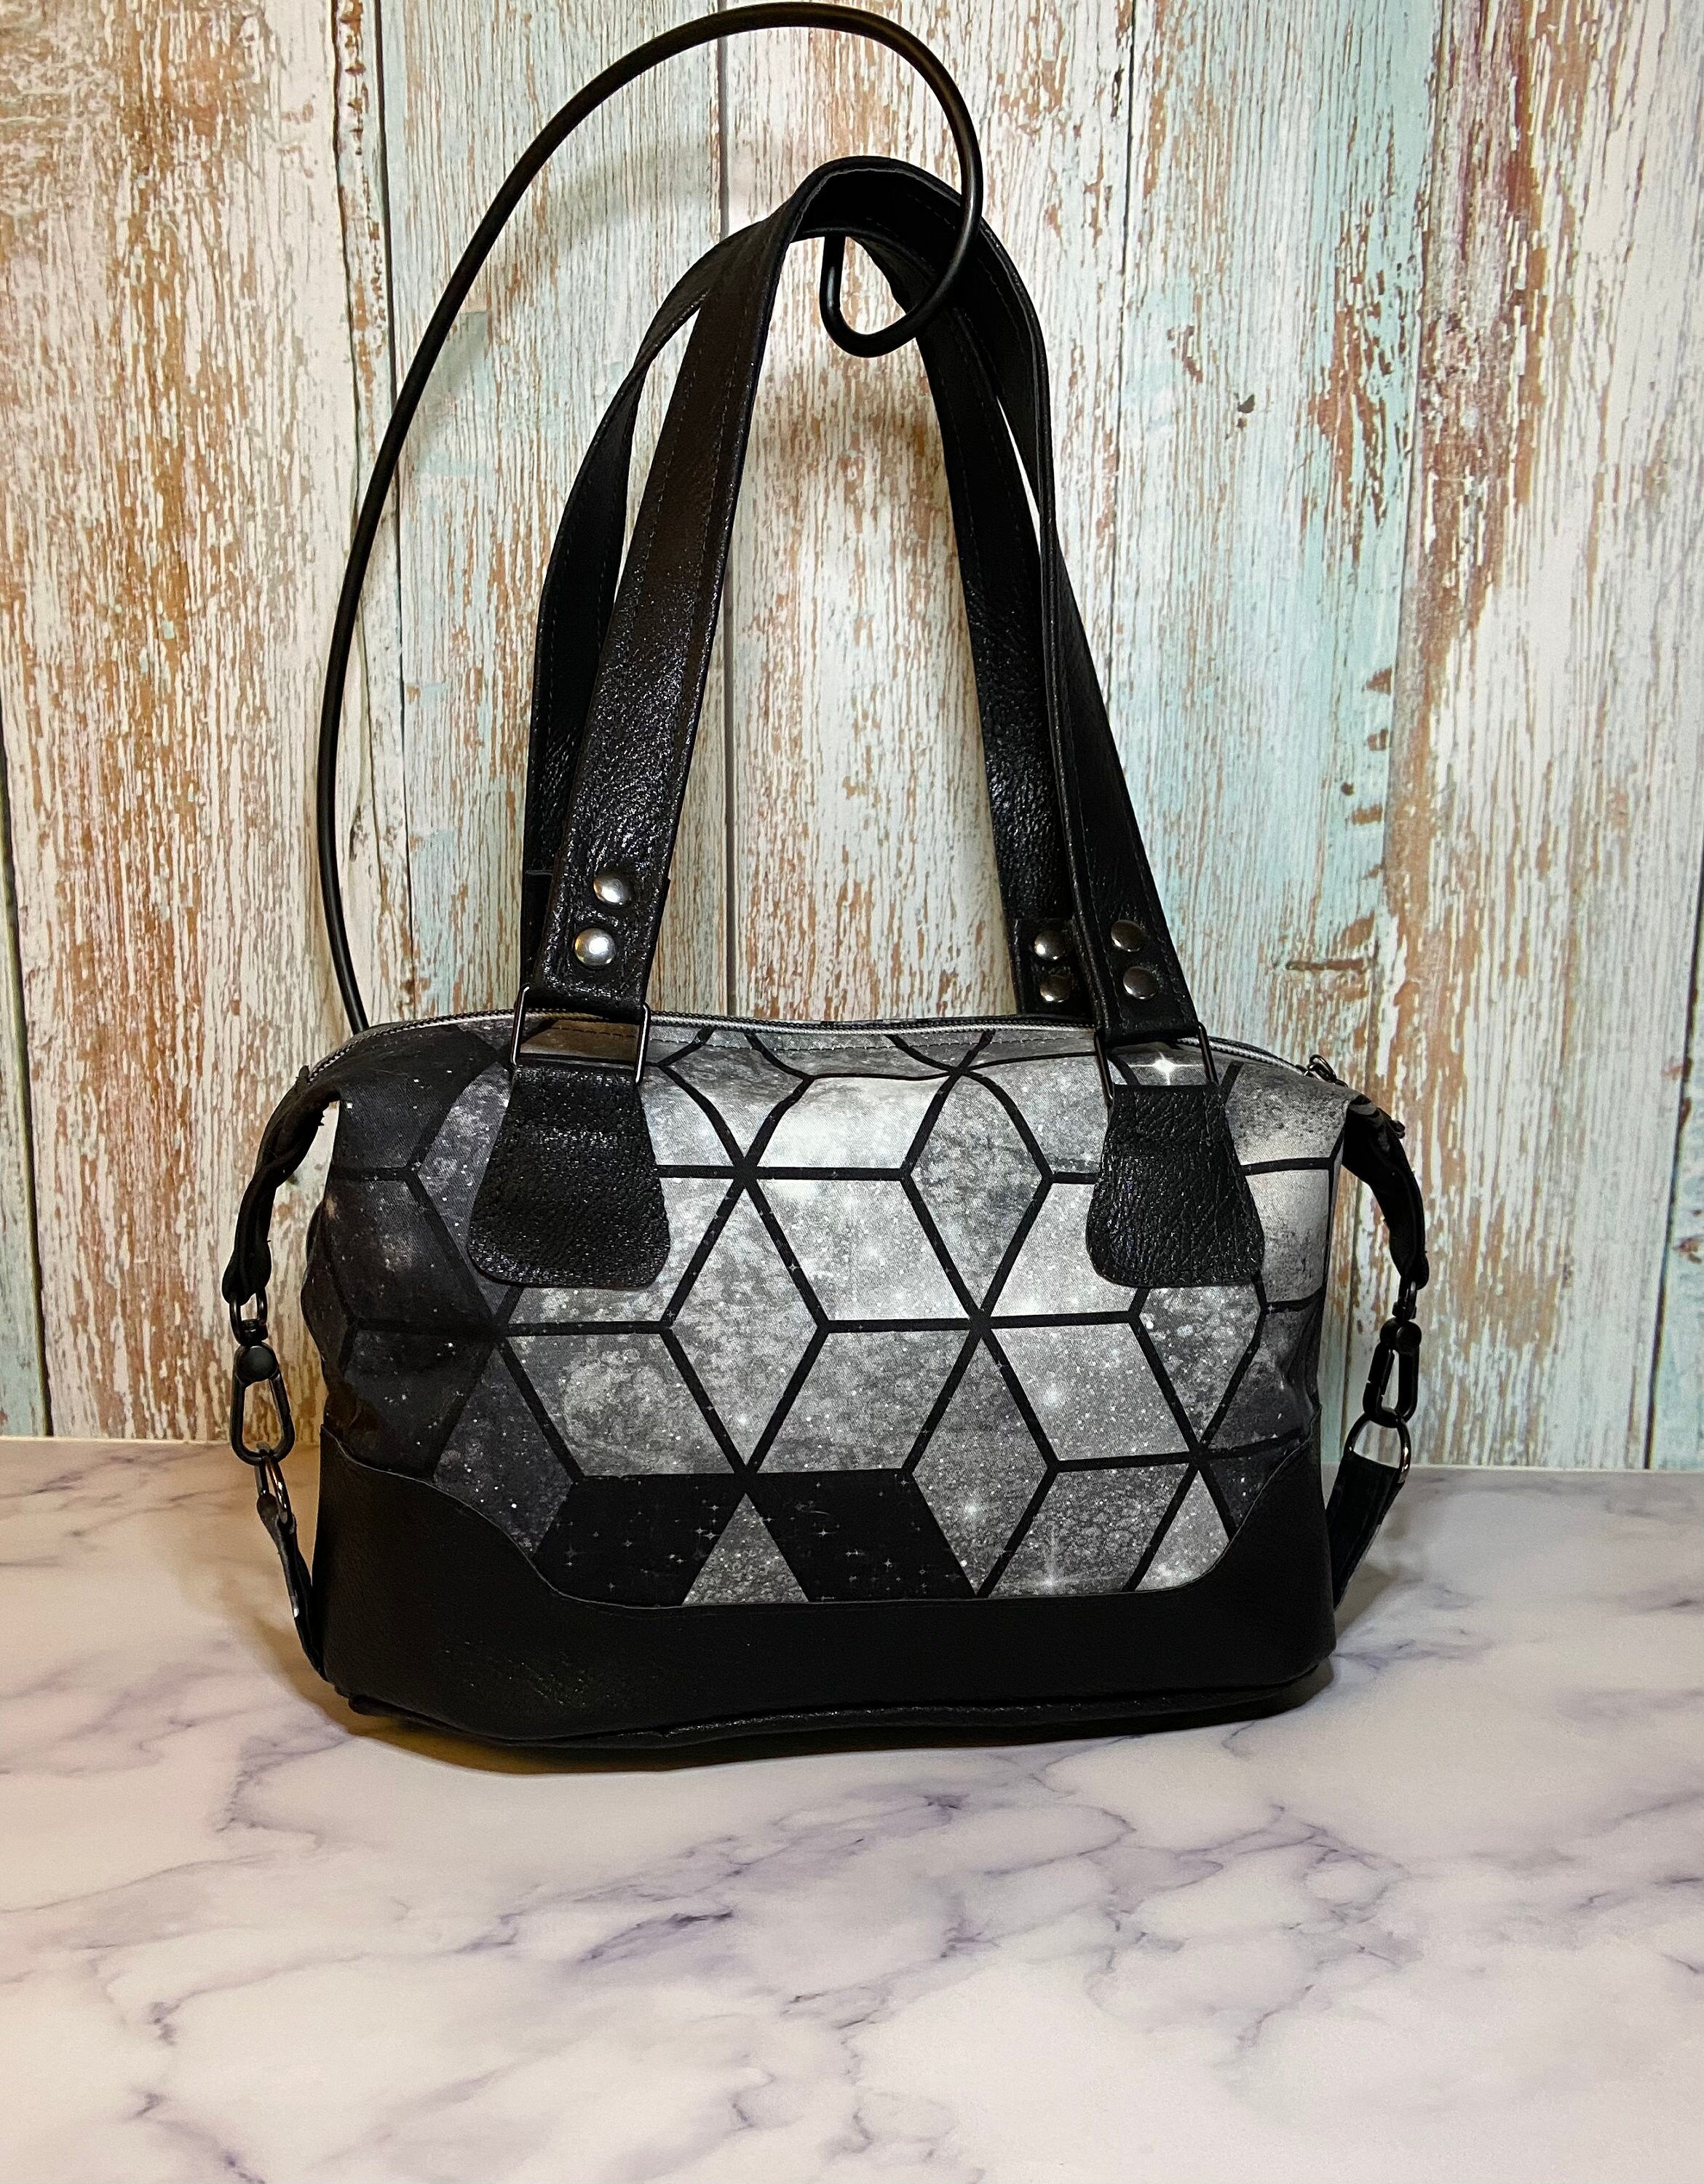 Wrist Bag with Geometric Patterns Gold Green and Black Zipper Clutch Bags & Purses Handbags Wristlets 